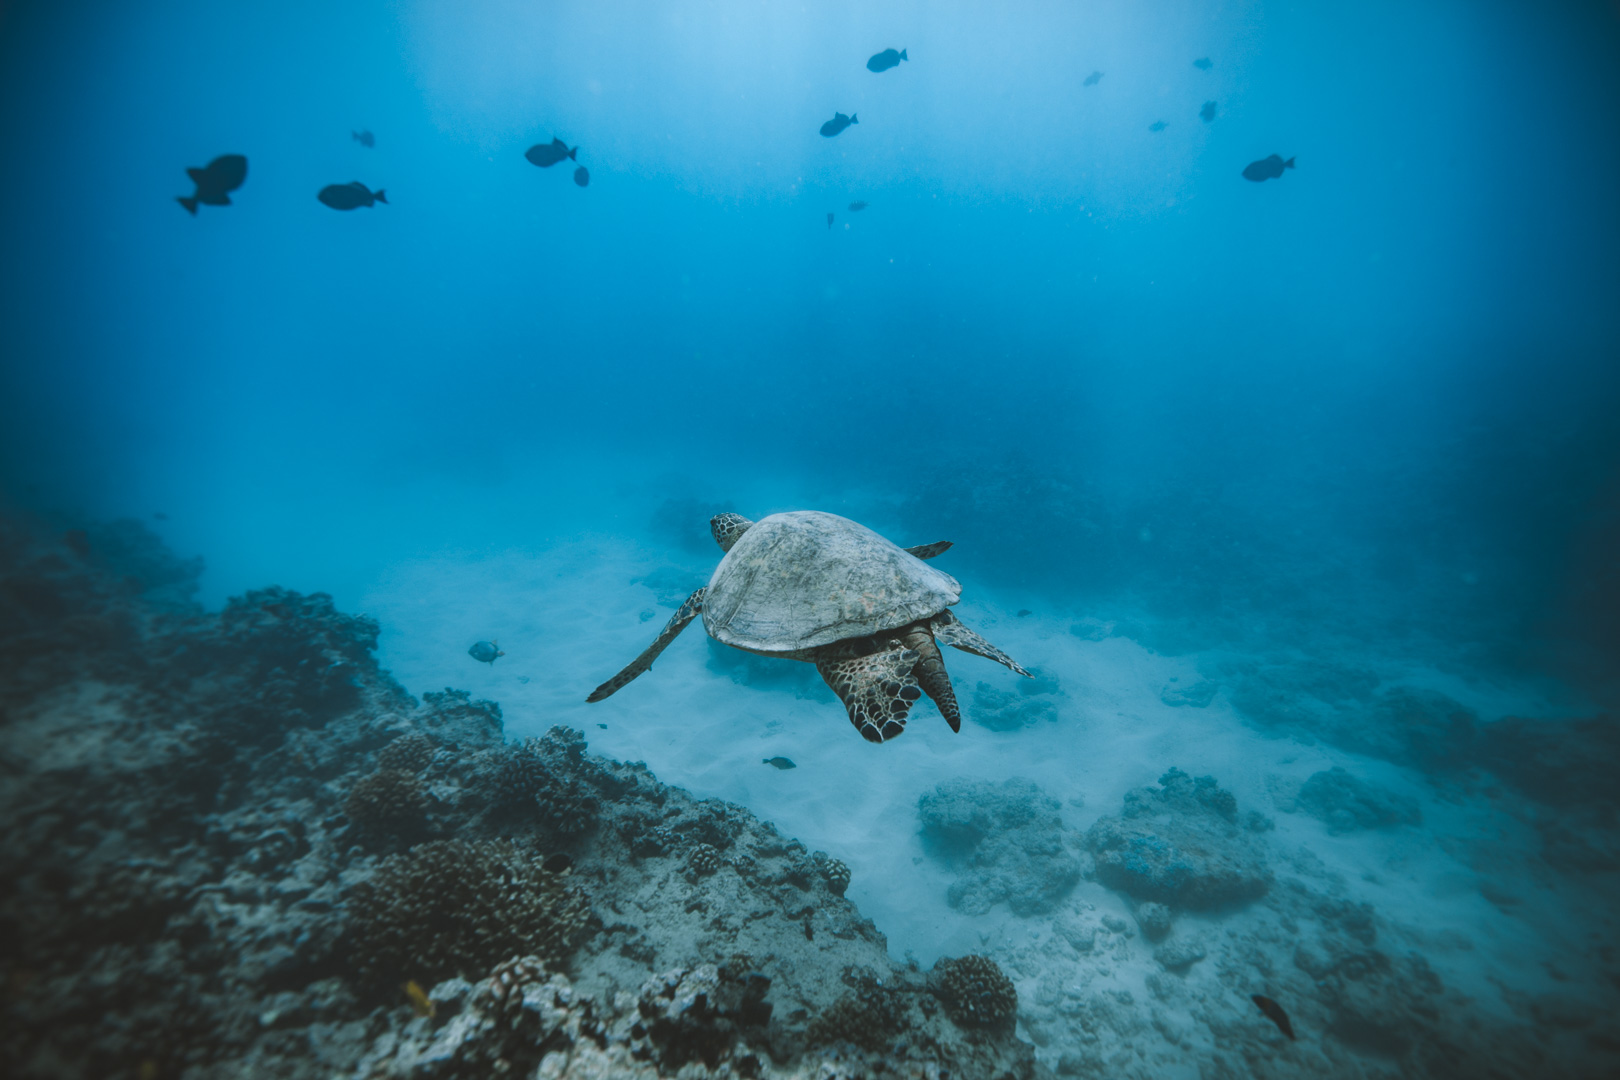 Green Sea turtle swiming underwater at tropical reef.